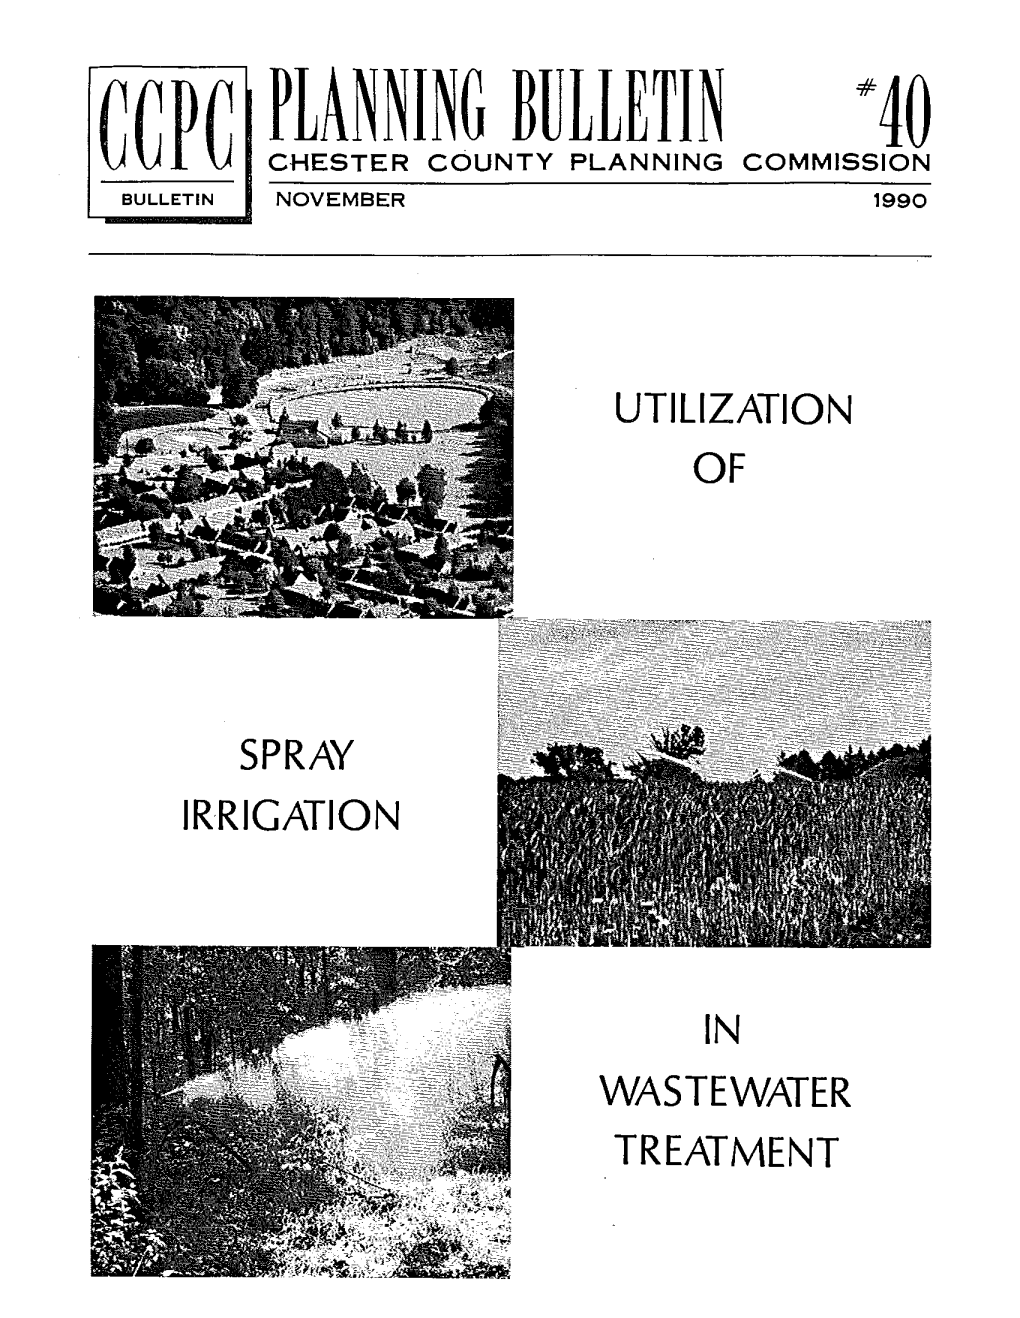 Utilization of Spray Irrigation in Wastewater Treatment